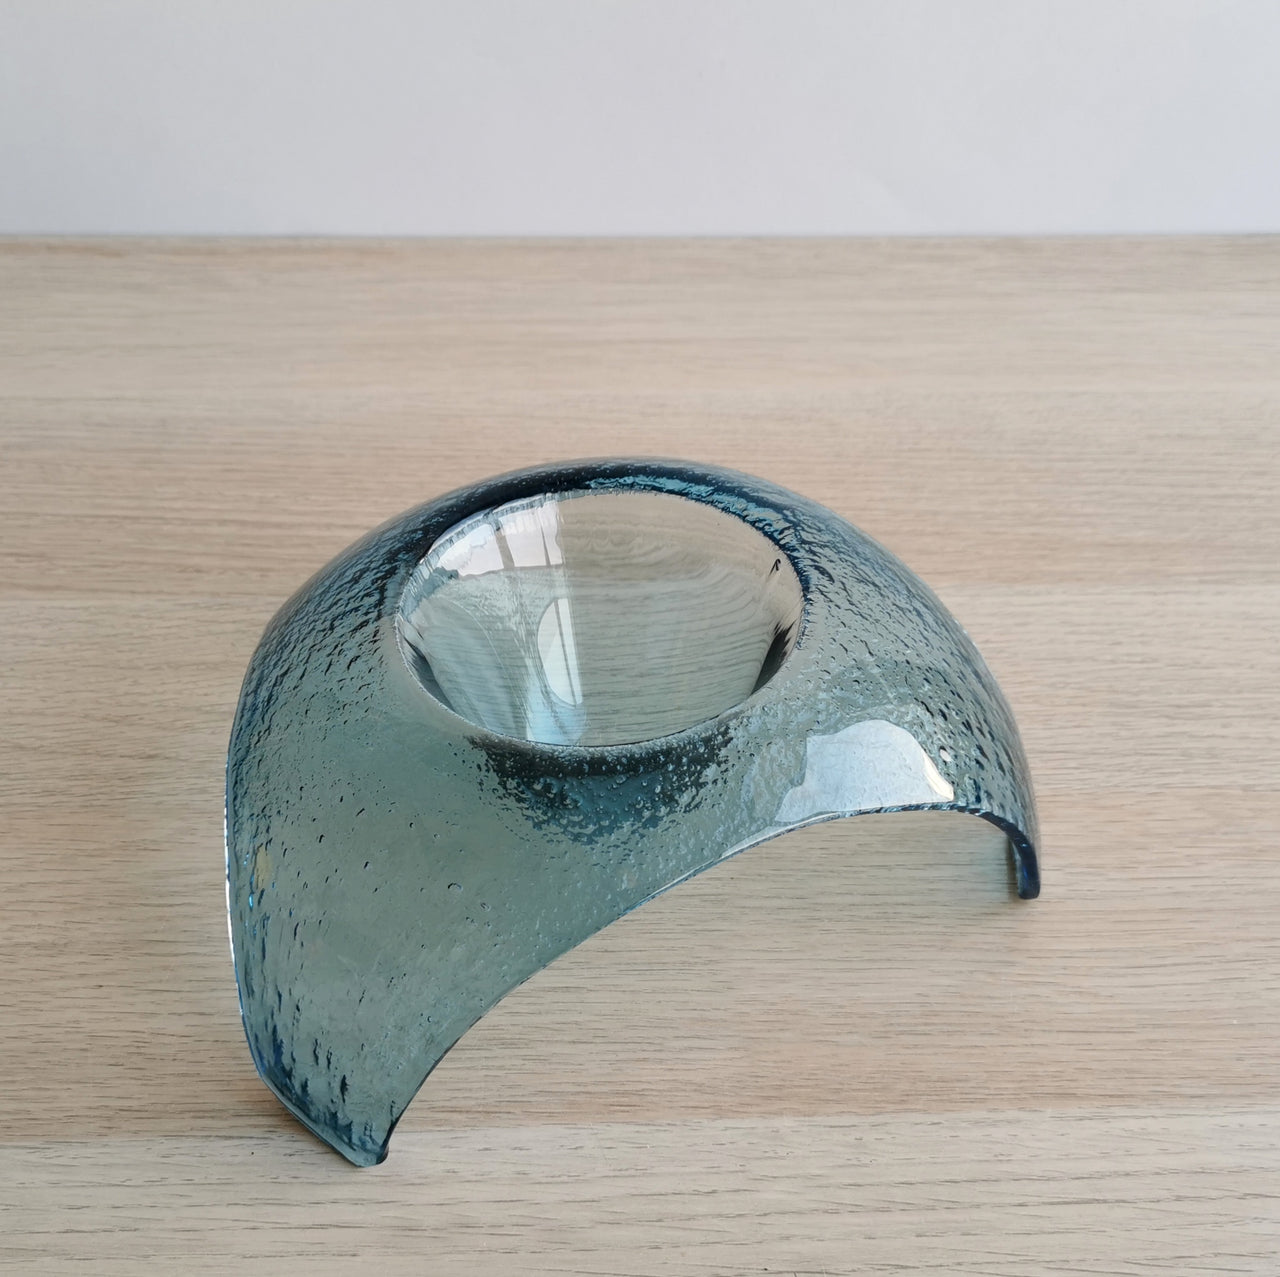 SOL Minimalist Sky Blue Glass Bowl. Artistic One Of A Kind Glass Bowl - 3 15/16" (10cm.)